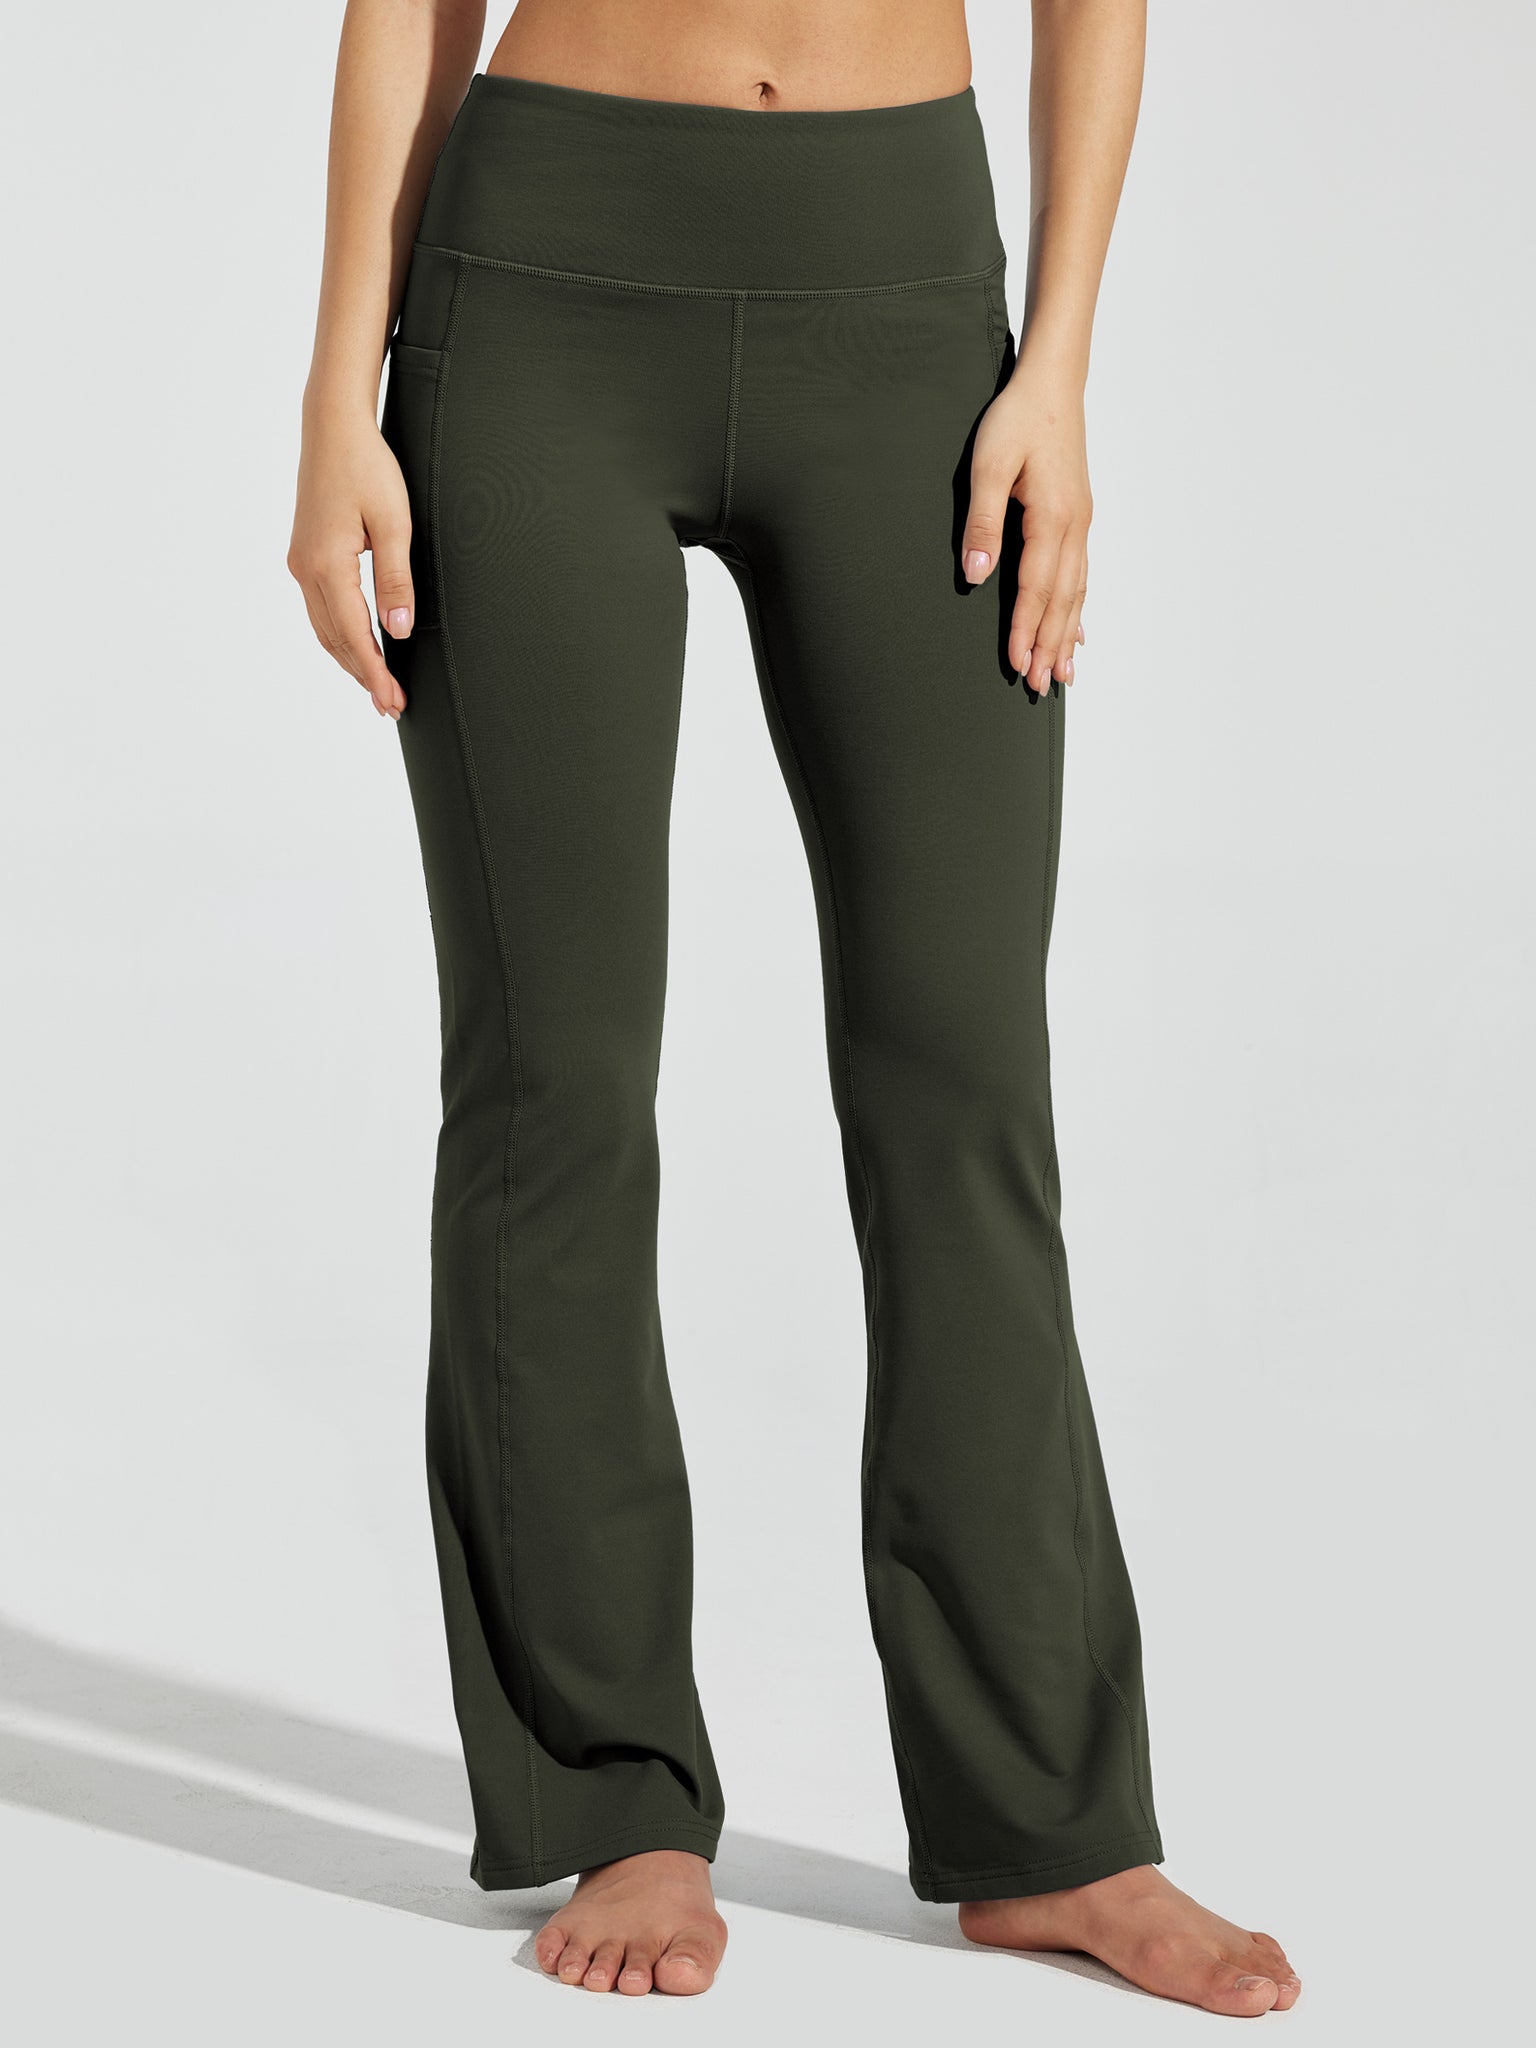 Women's Fleece Lined Bootcut Yoga Pants_Olive_model2